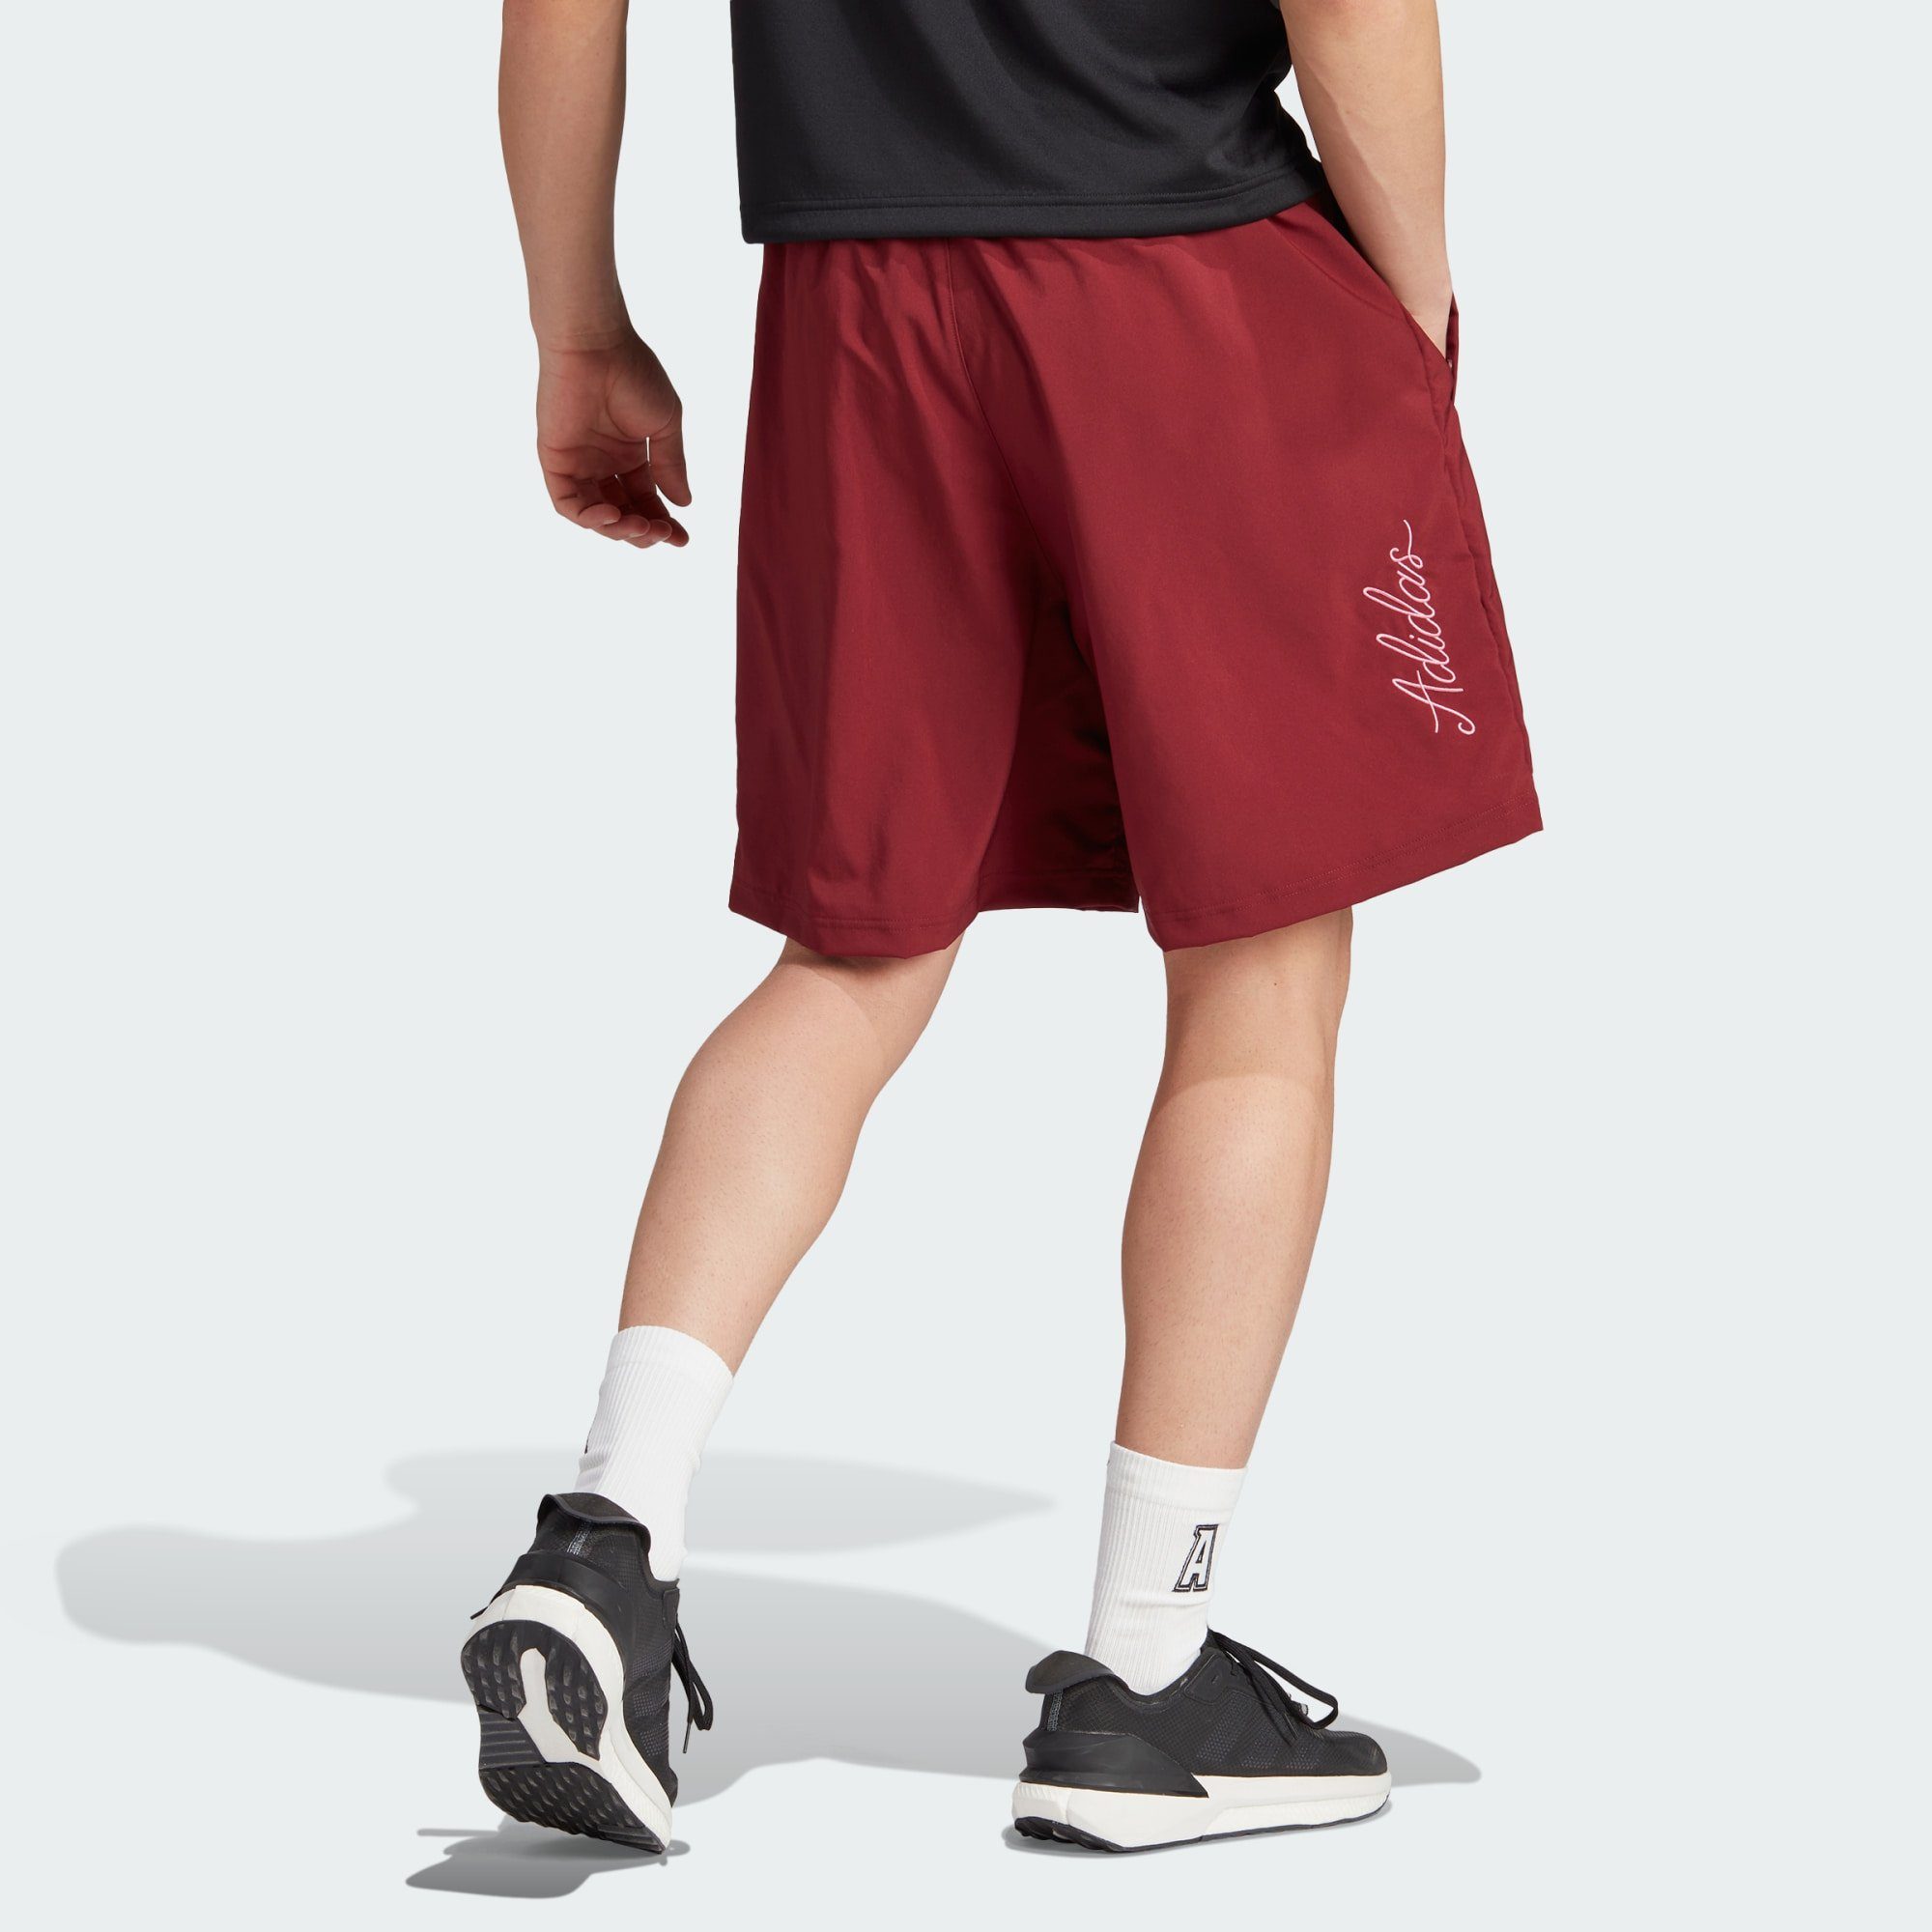 SHORTS Shorts Red Sportswear SCRIBBLE adidas Shadow